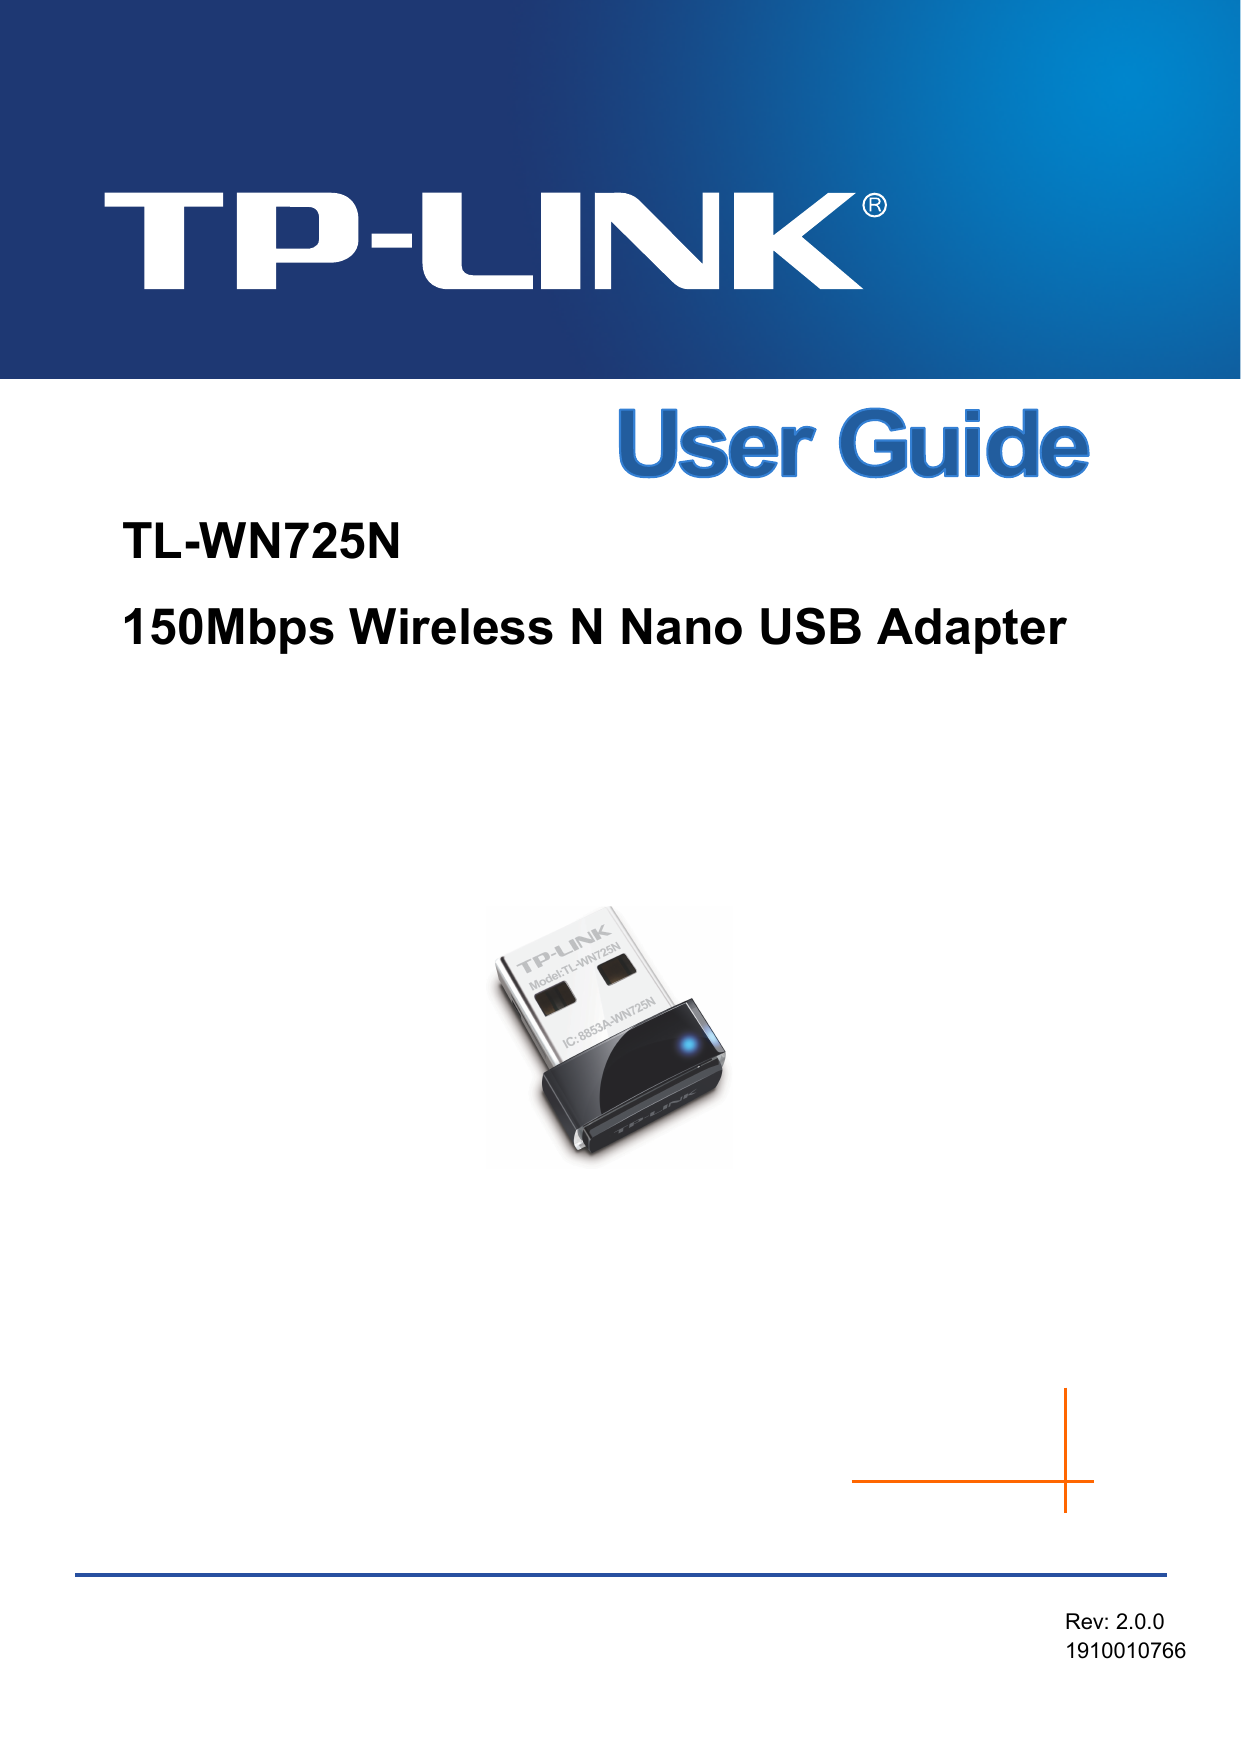    TL-WN725N 150Mbps Wireless N Nano USB Adapter   Rev: 2.0.0 1910010766 